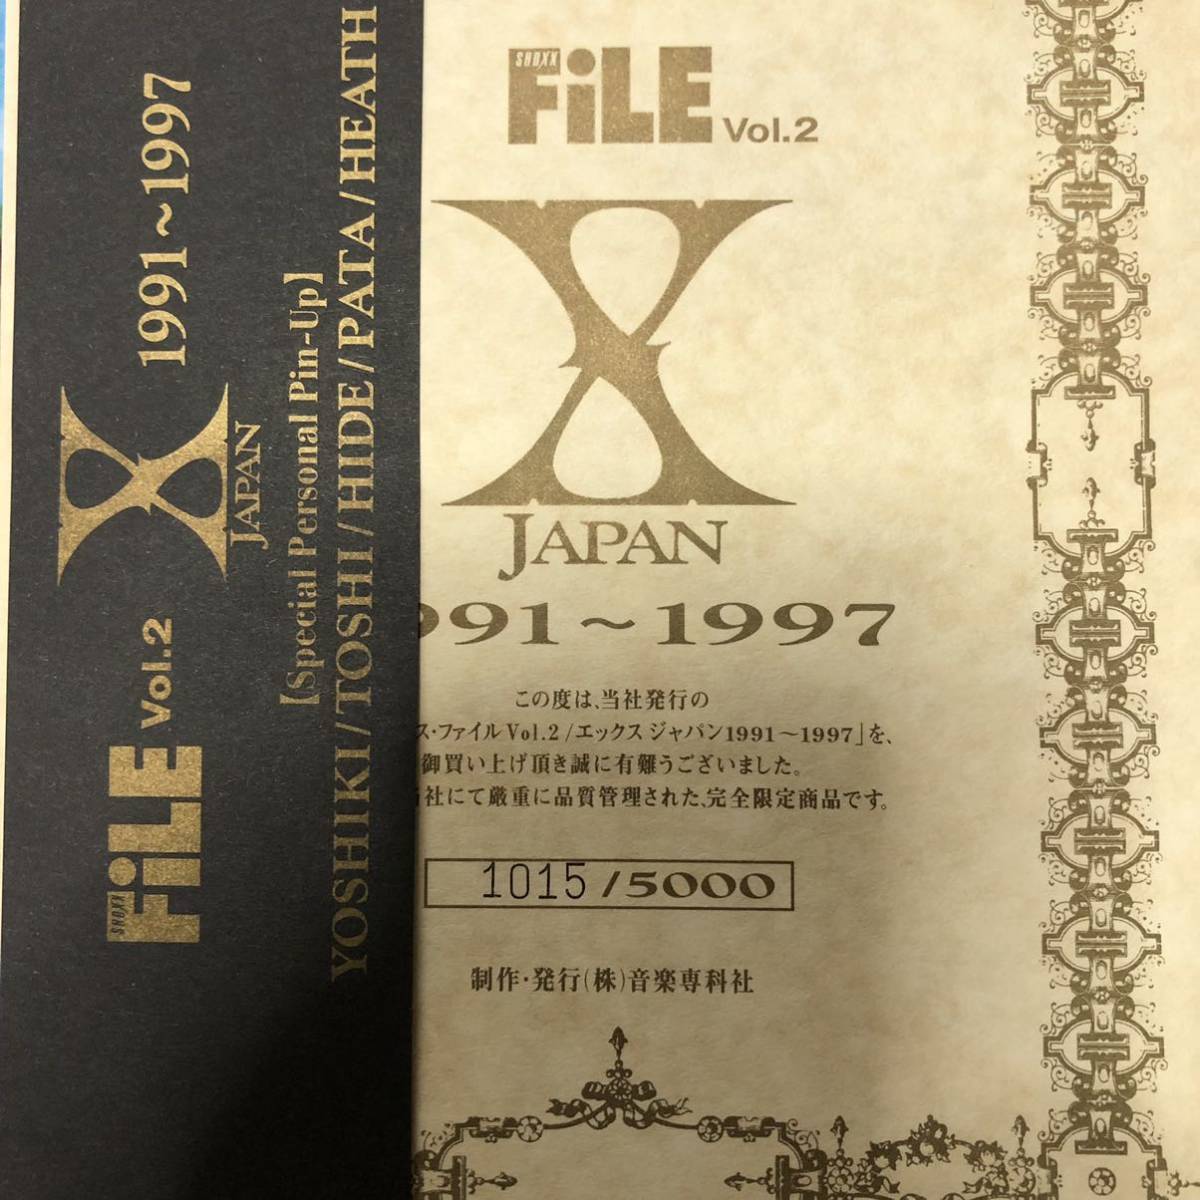 X JAPAN YOSHIKI TOSHI hide PATA HEATH 写真集 SHOXX complete FILE SET